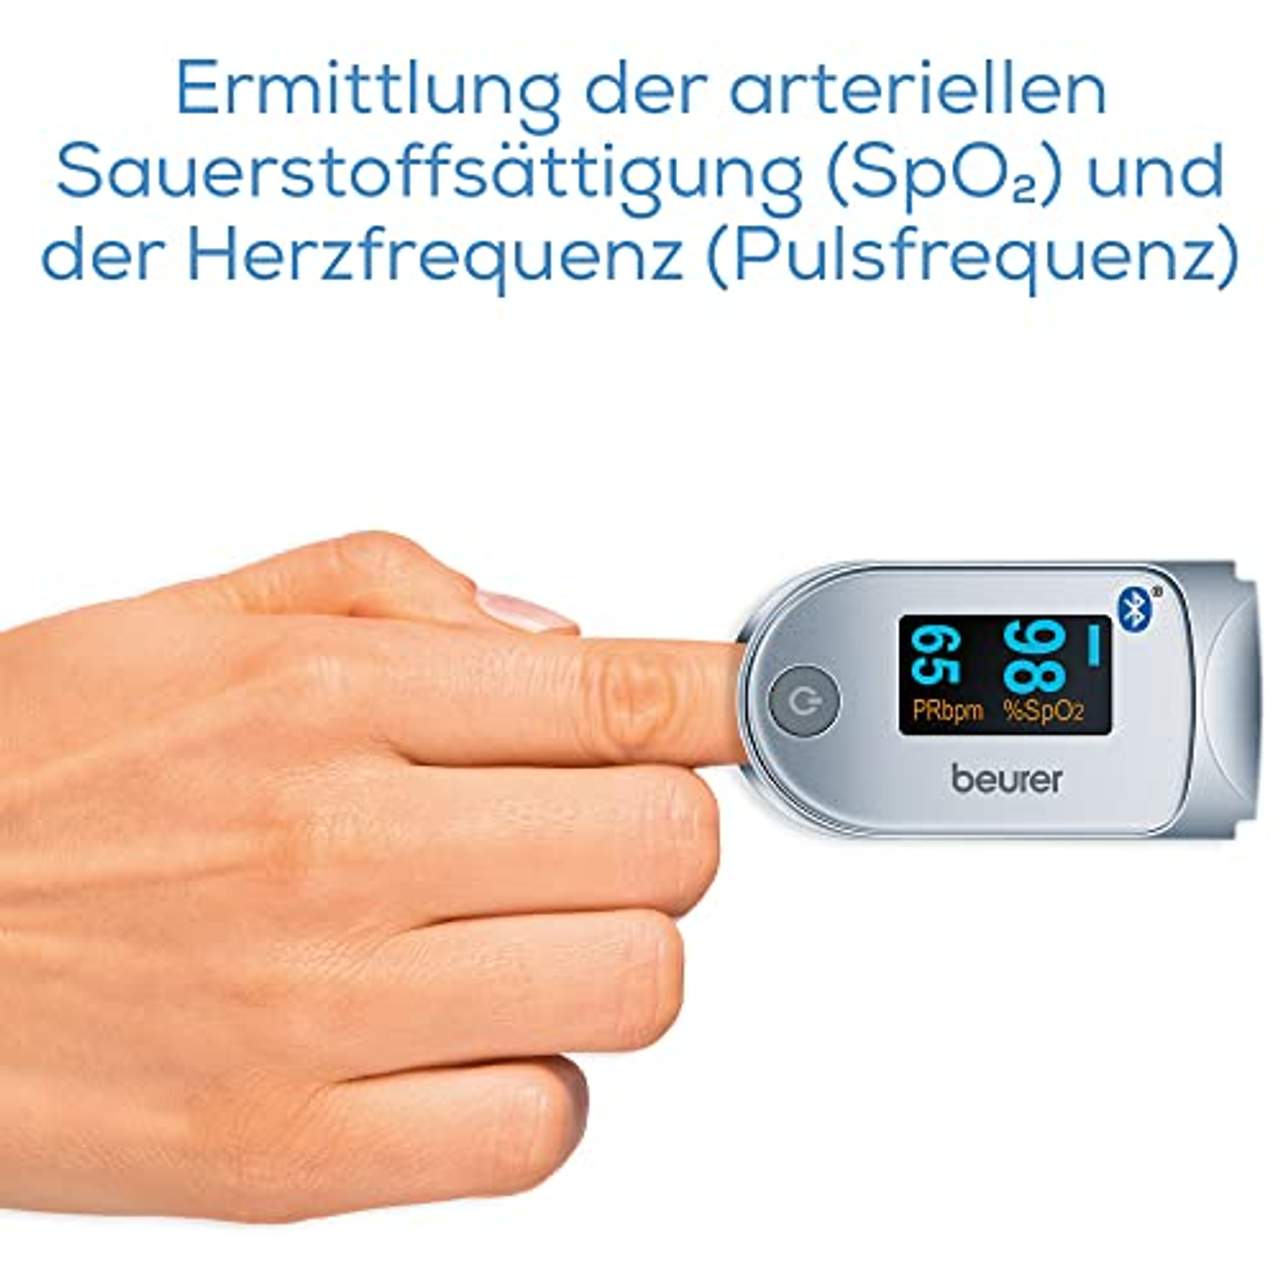 Beurer PO 60 Pulsoximeter mit Bluetooth